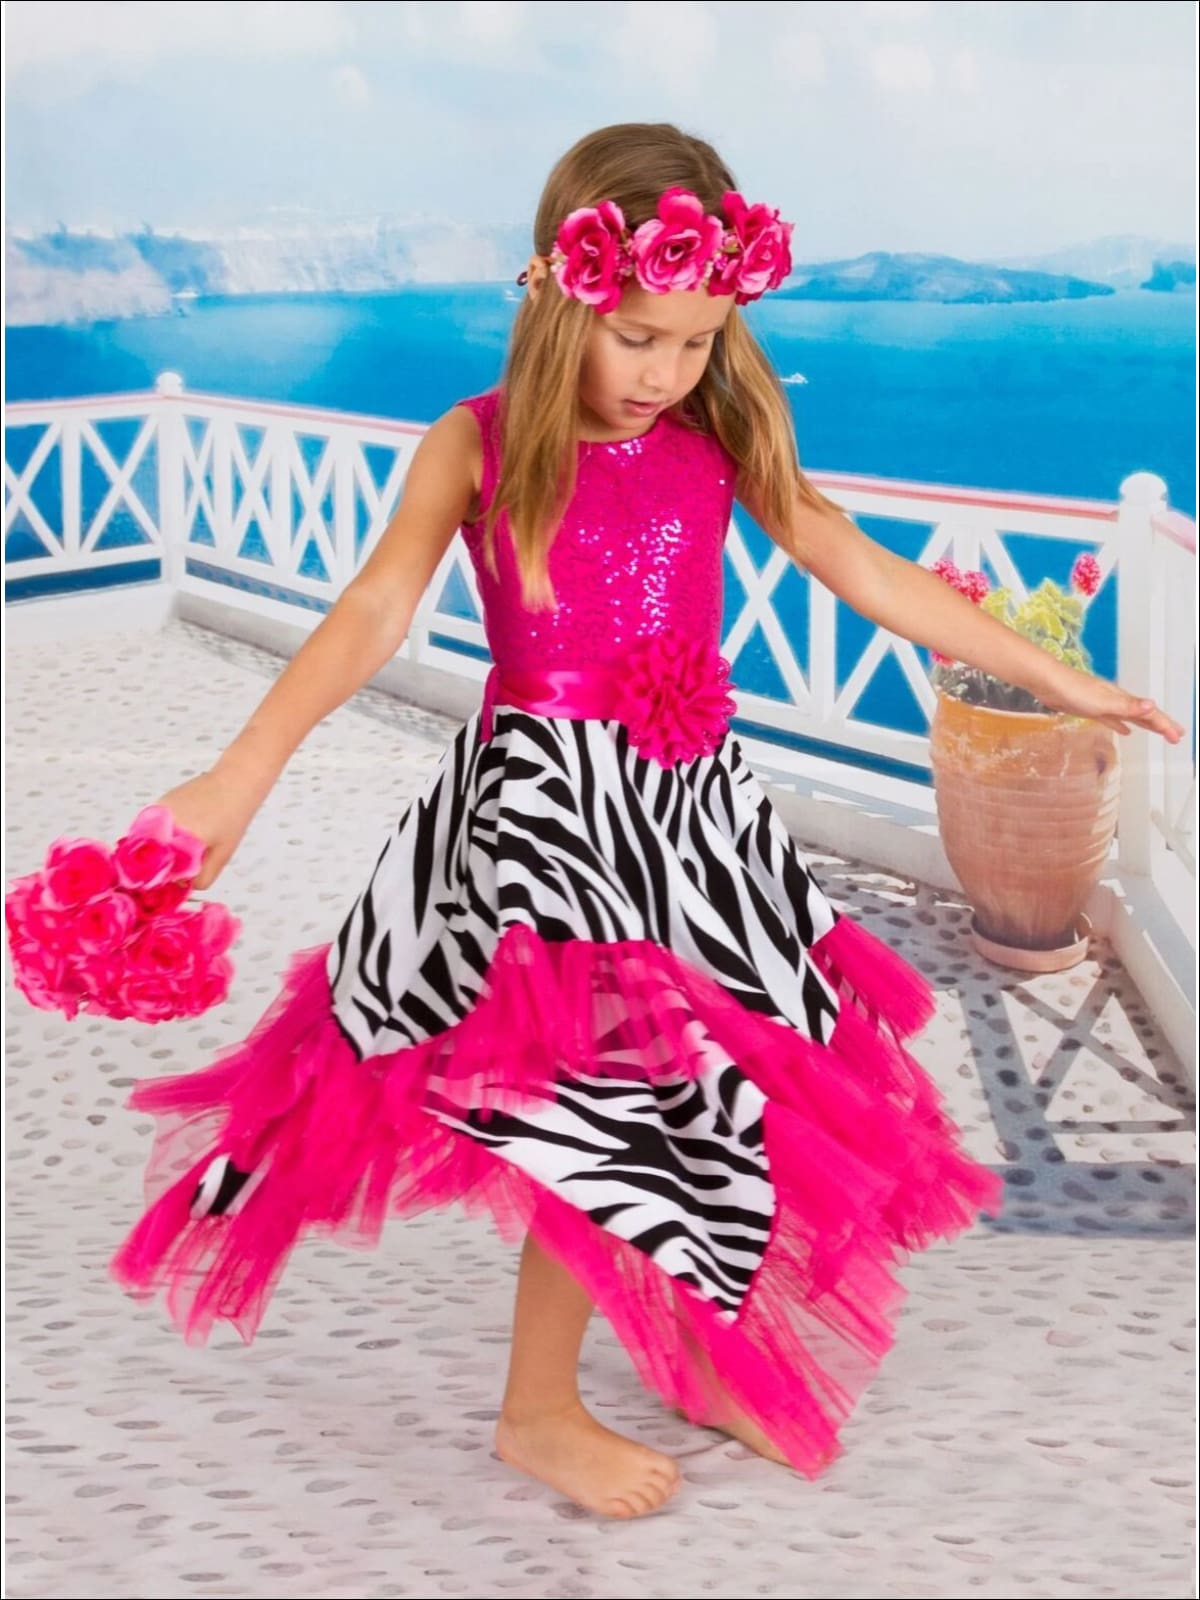 Girls Mint Floral & Fuchsia Handkerchief Dress - Girls Spring Dressy Dress